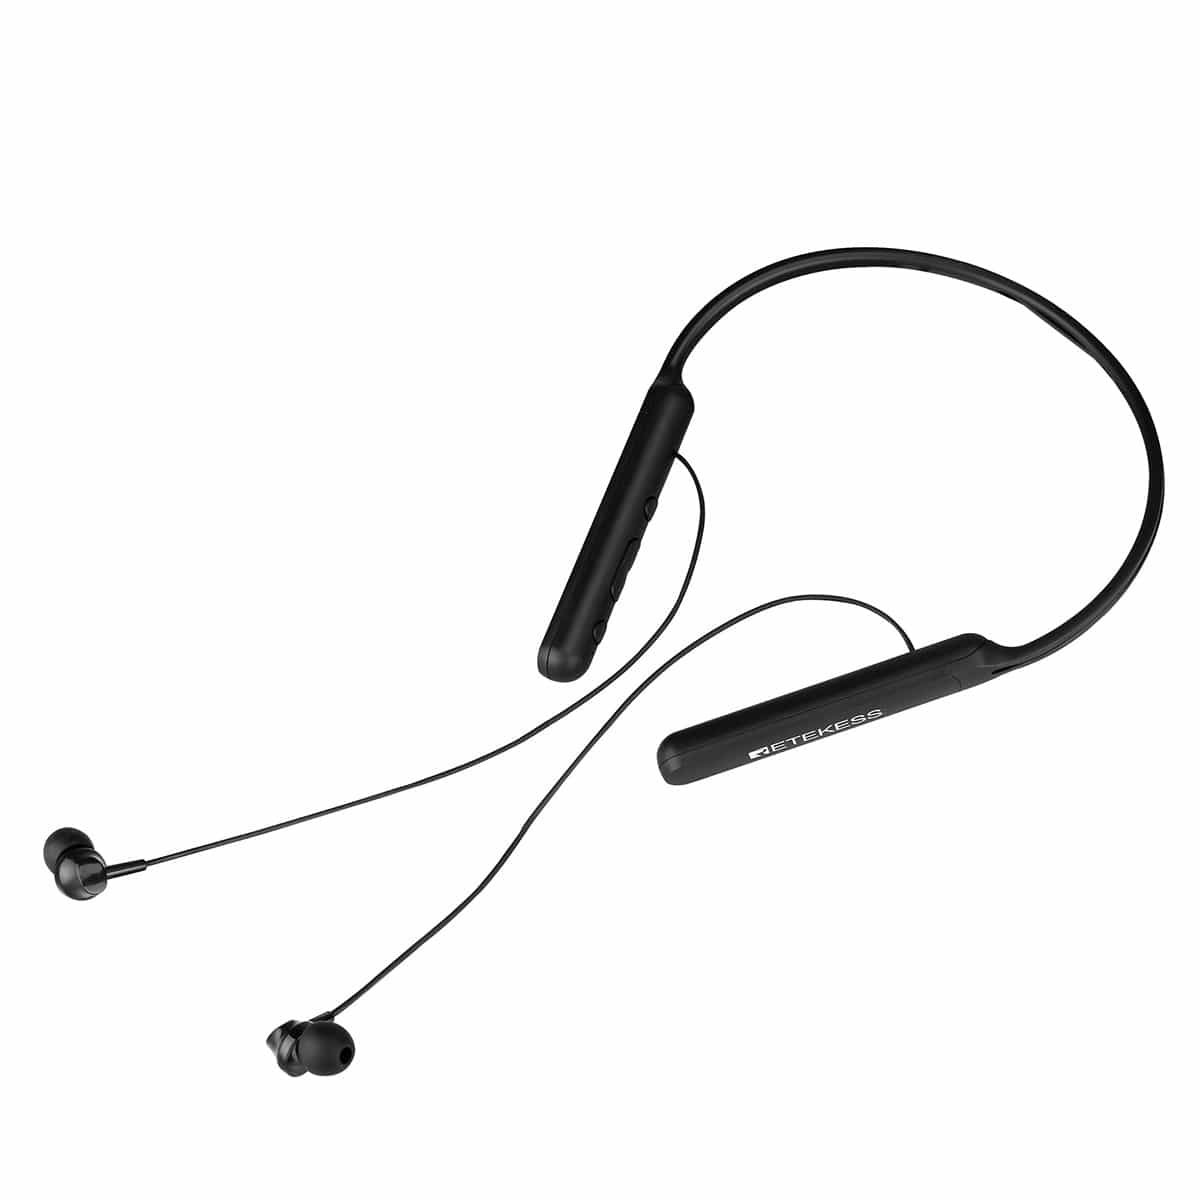 Retekess TR108 Neck Hanging FM Receiver In-Ear Earphone with Bluetooth